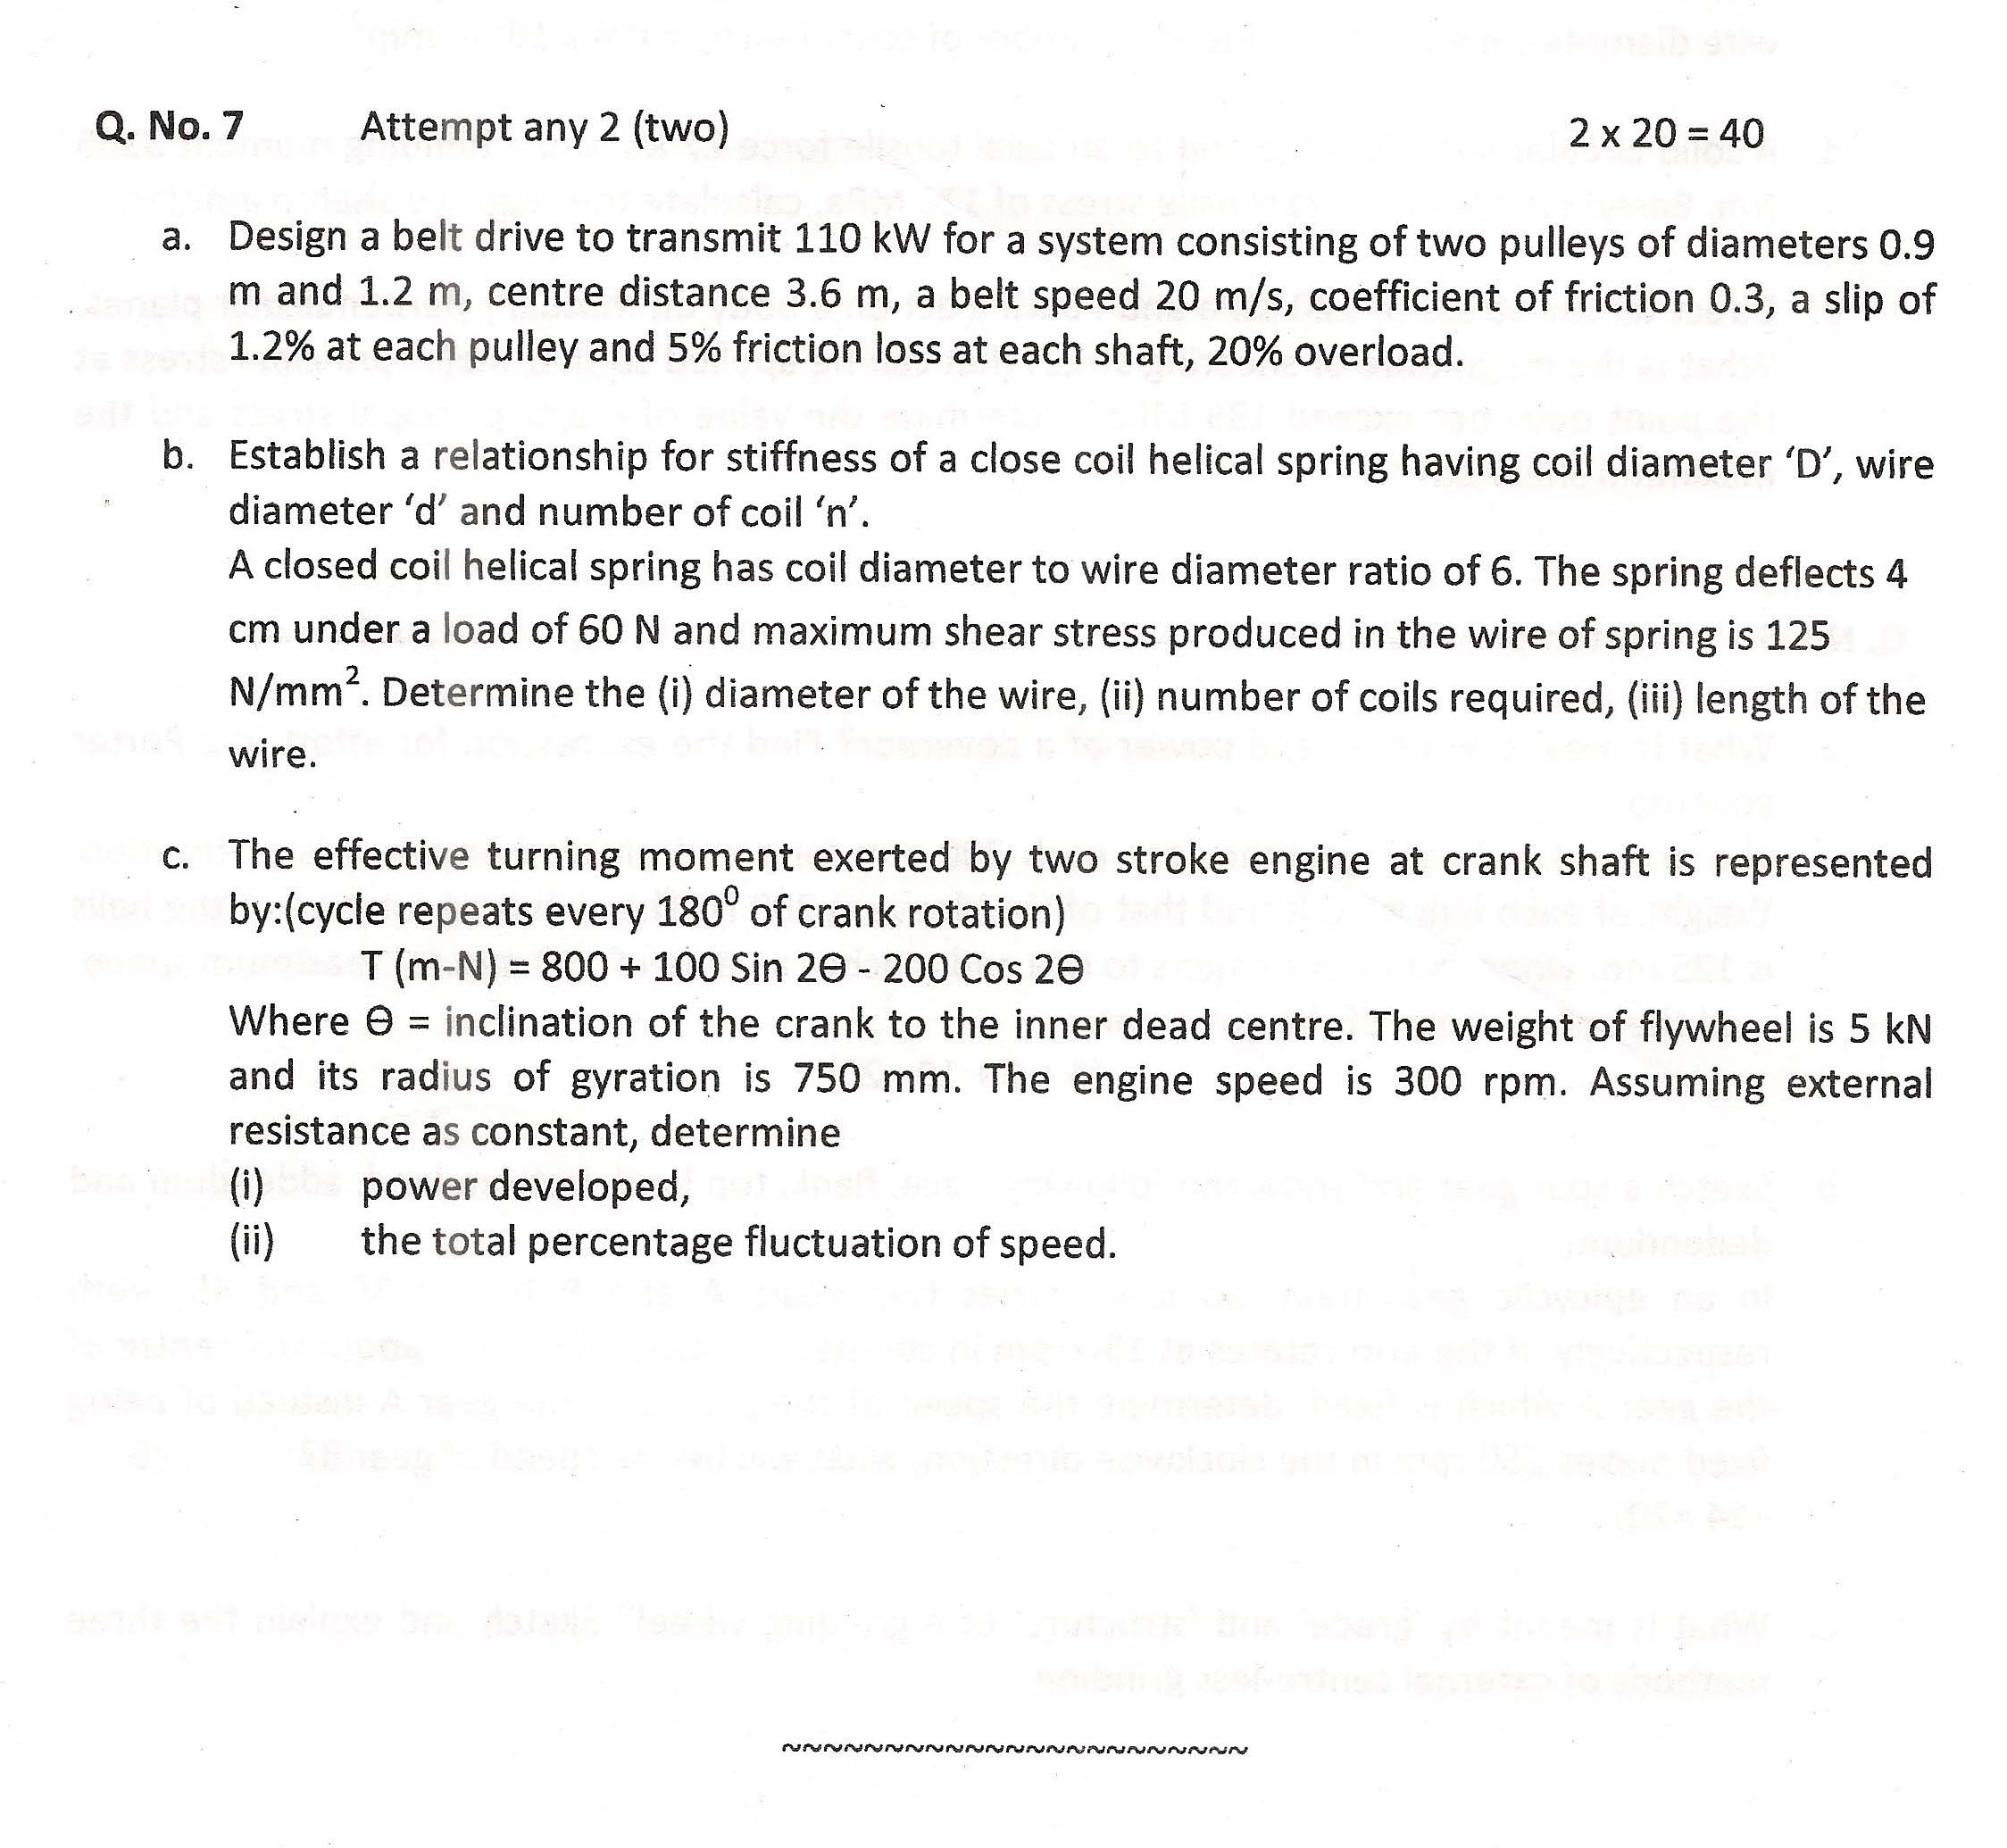 APPSC AE Electrical Exam 2012 Mechanical Engineering Paper II 4